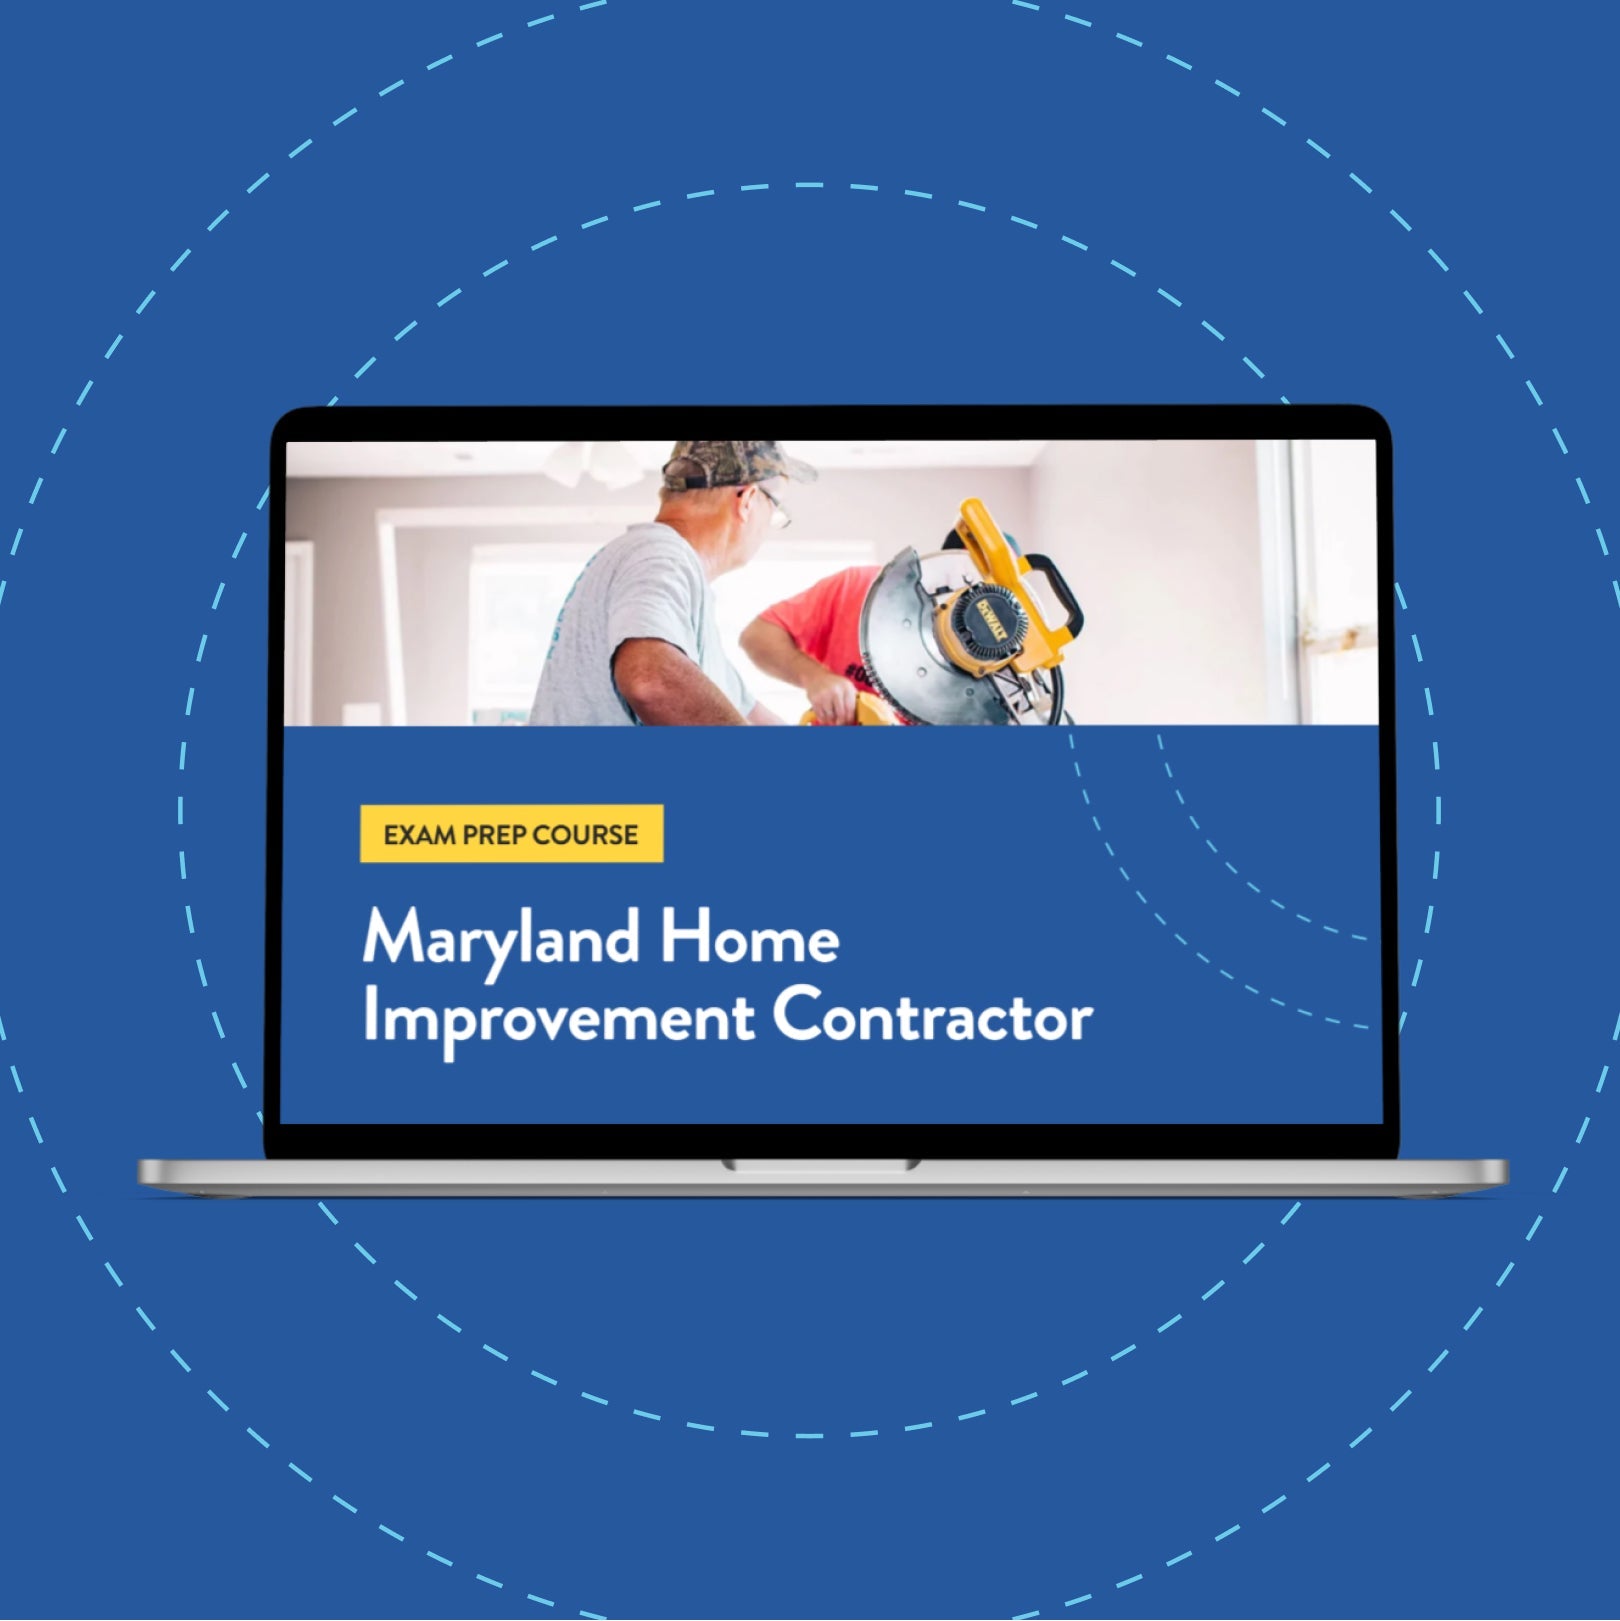 Maryland Home Improvement Contractor (MHIC) Exam Prep Course